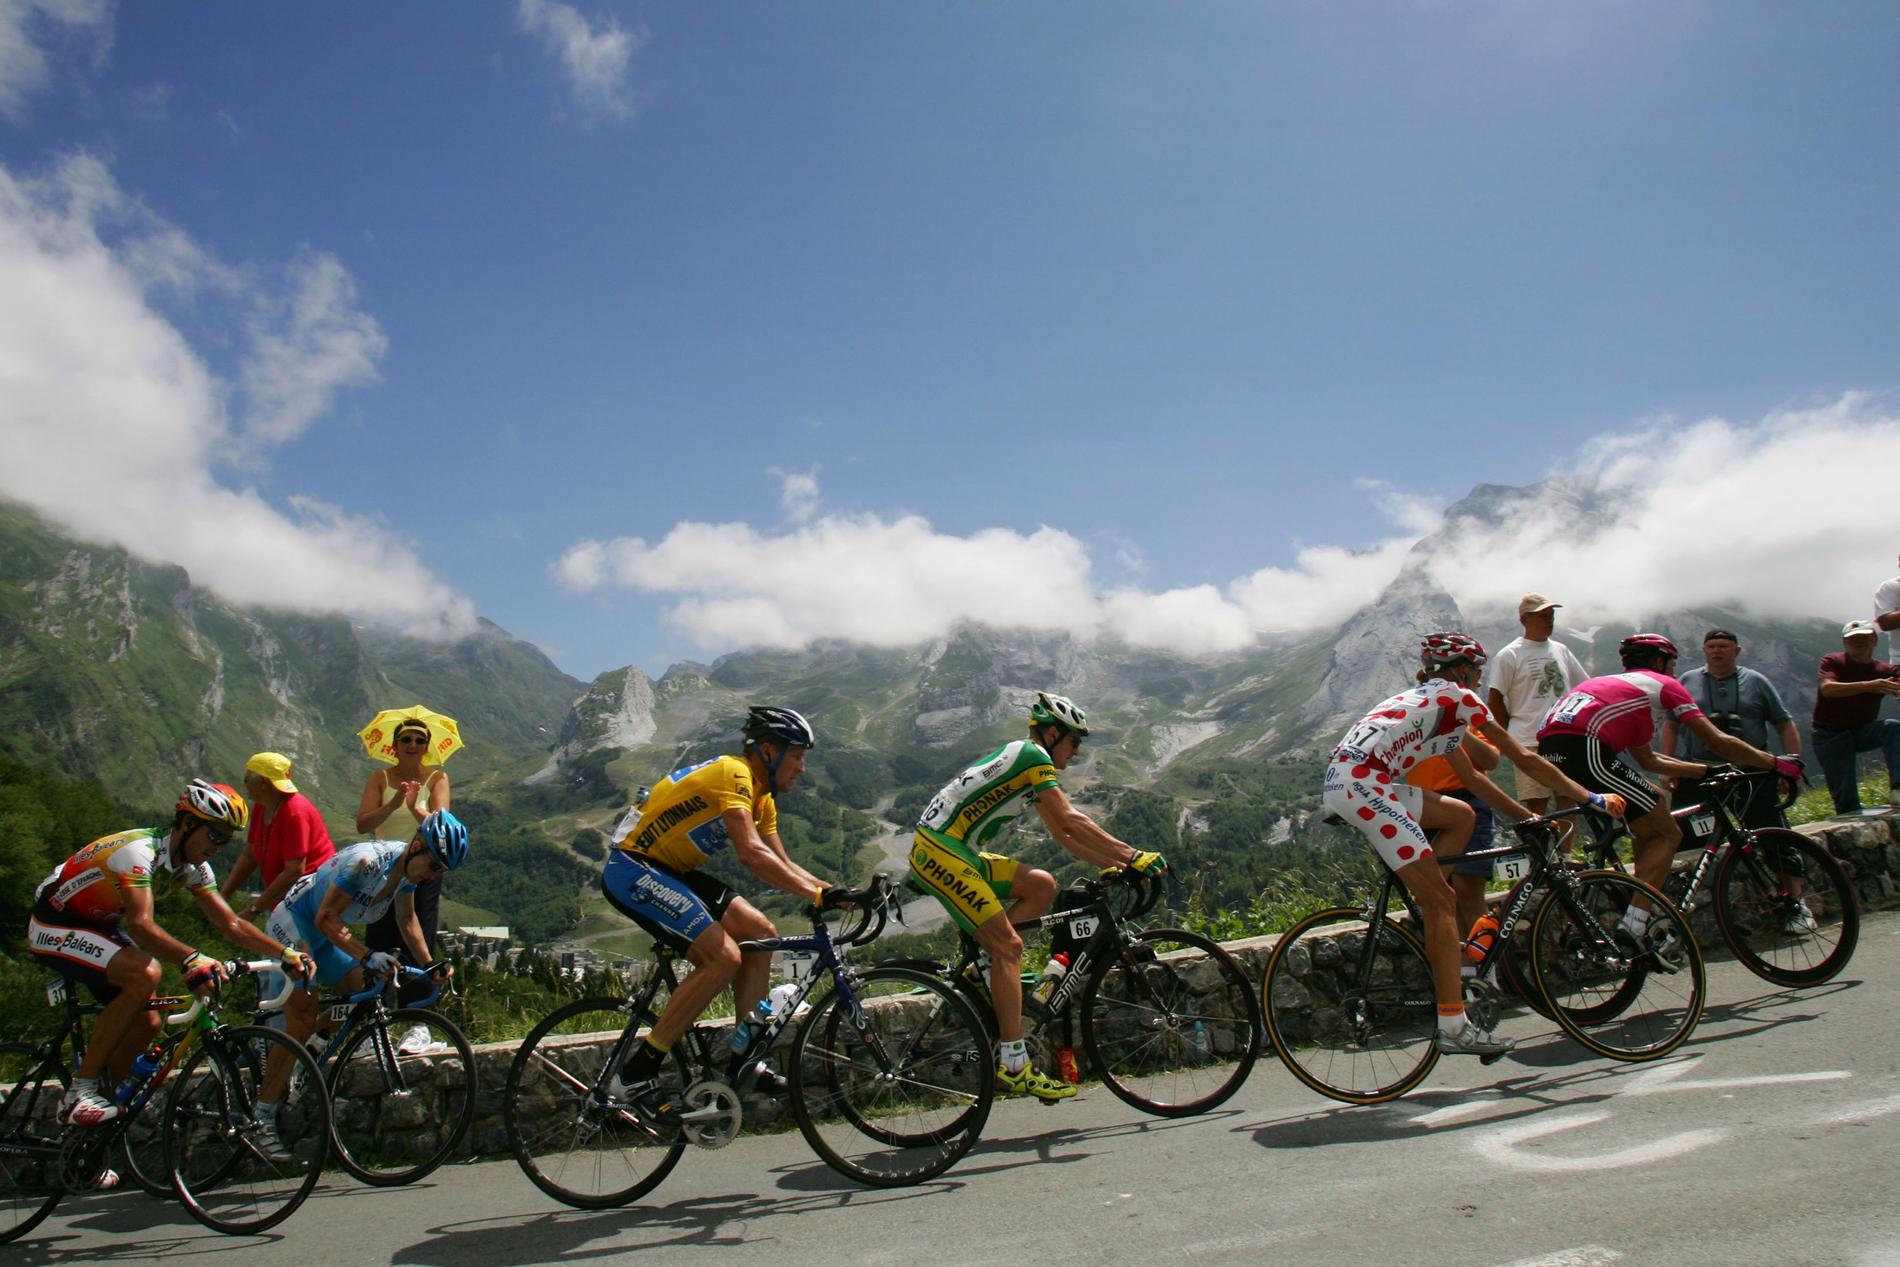 16:e etappen mellan Mourenx och Pau 2003. Lance Armstrong i den gula ledartröjan.